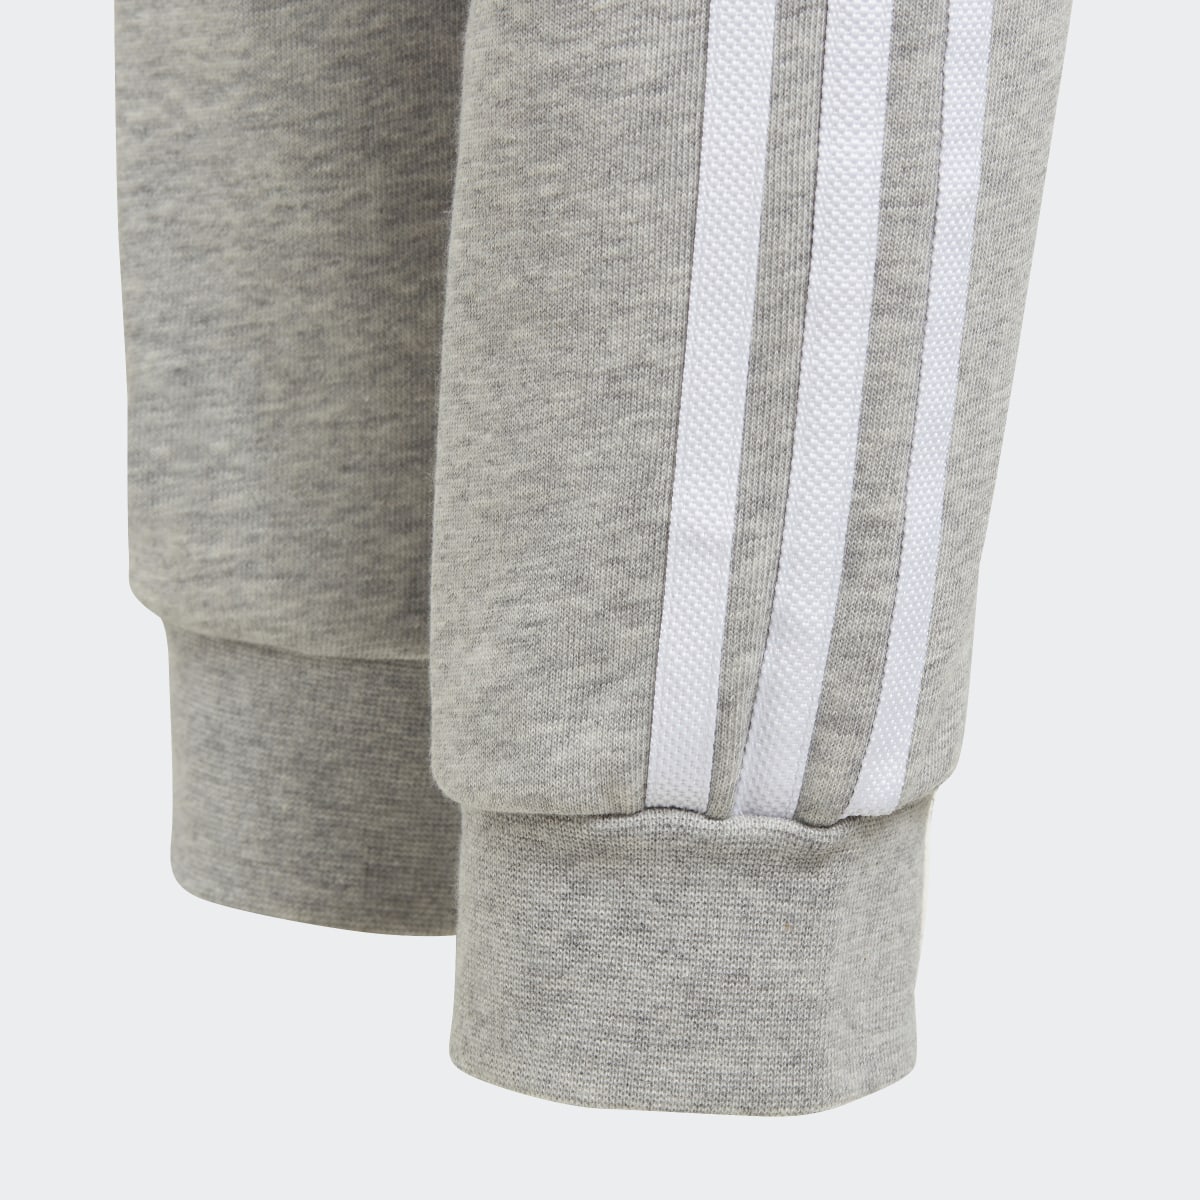 Adidas 3-Stripes Pants. 4